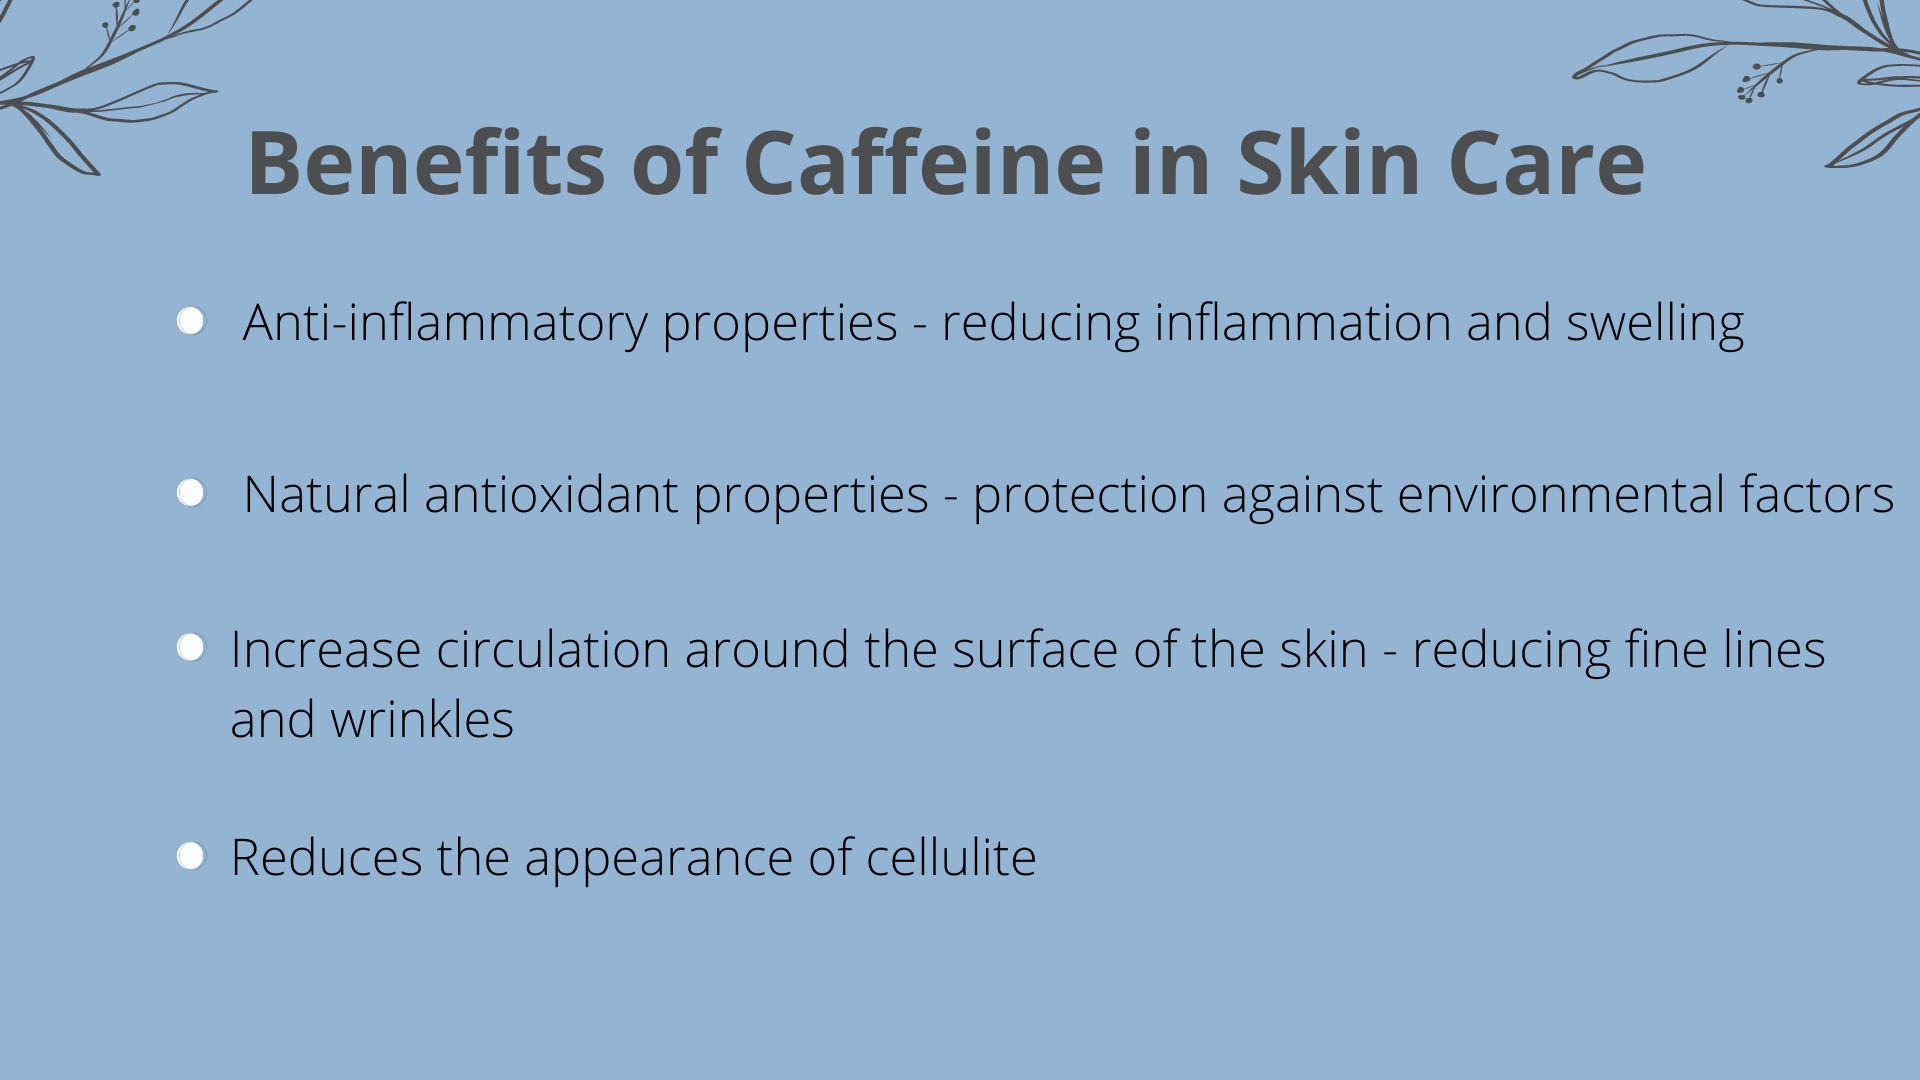 Benefits of Caffeine in Skin Care